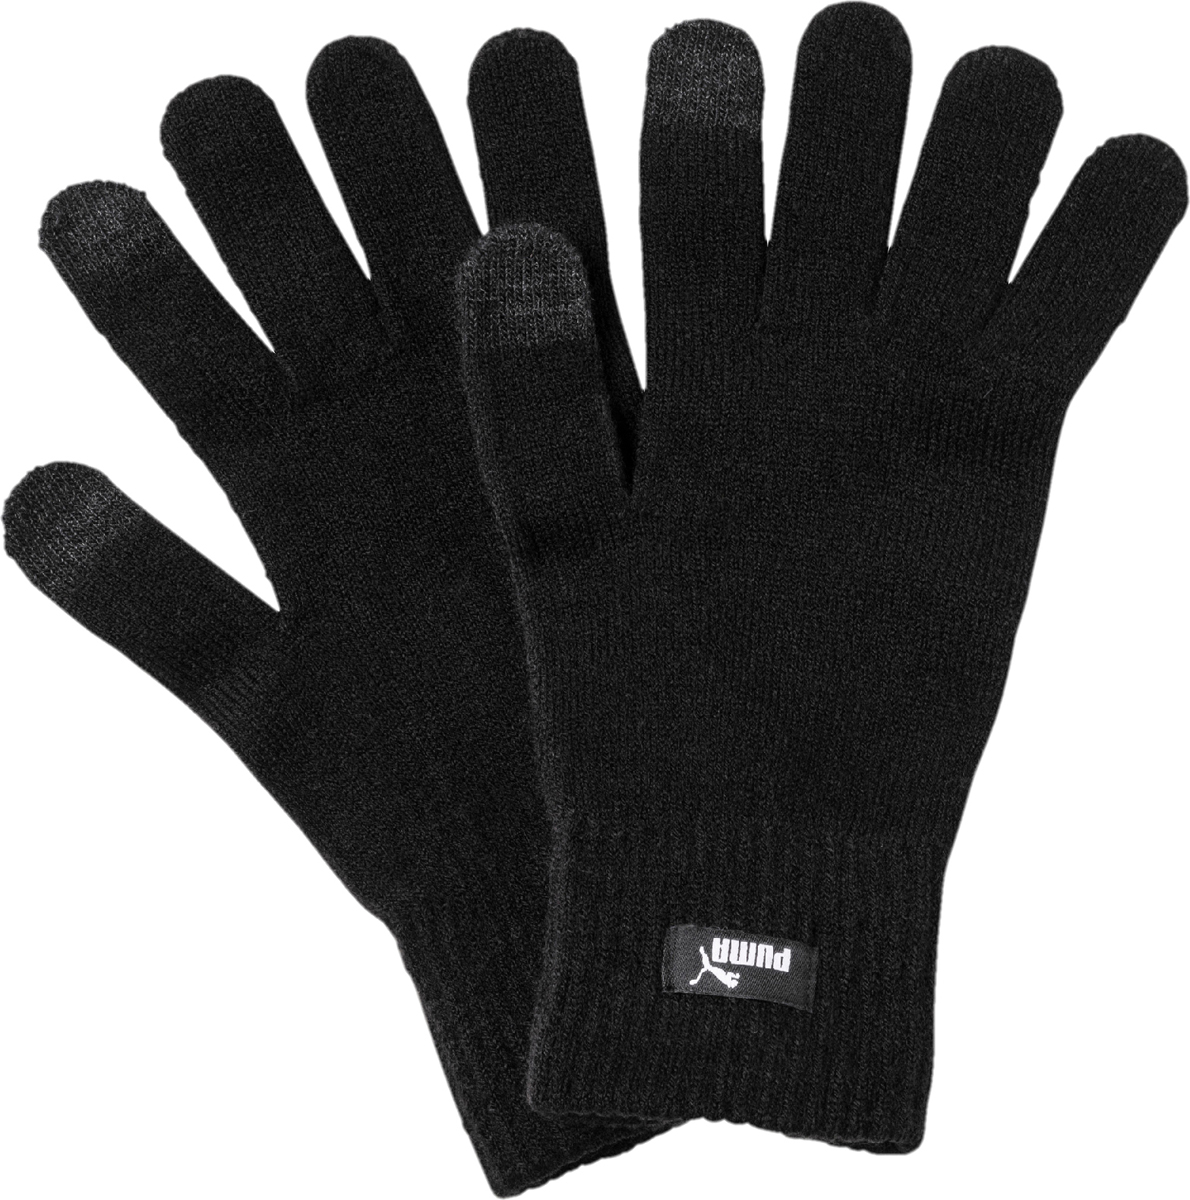 Перчатки Puma Knit Gloves, цвет: черный. 04131604. Размер L/XL (8,5)